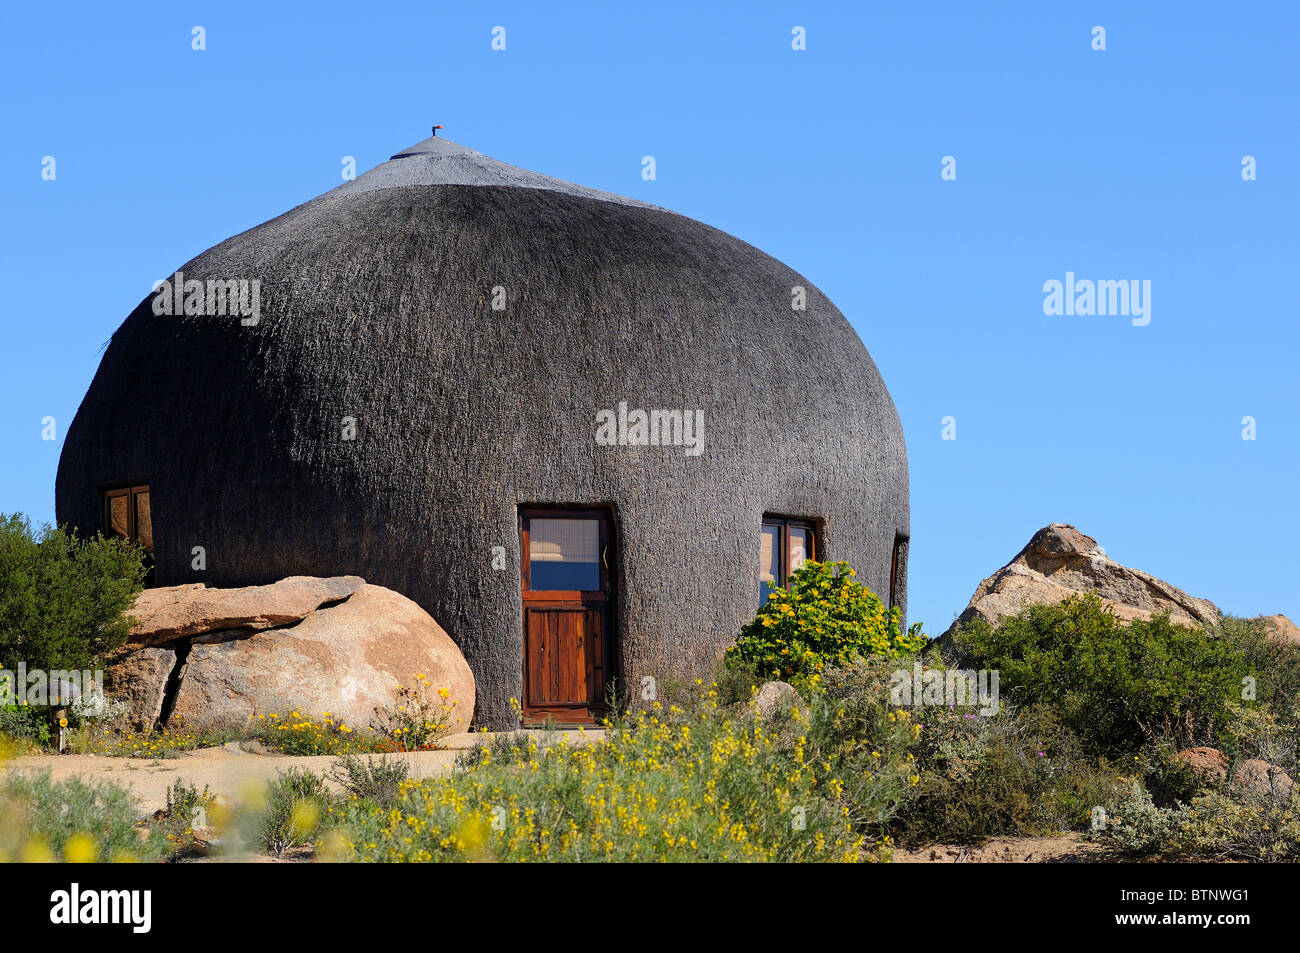 Namakwa Mountain Suite in the shape of a traditional hut of the Nama people, Naries Namakwa Retreat, Naries, South Africa Stock Photo